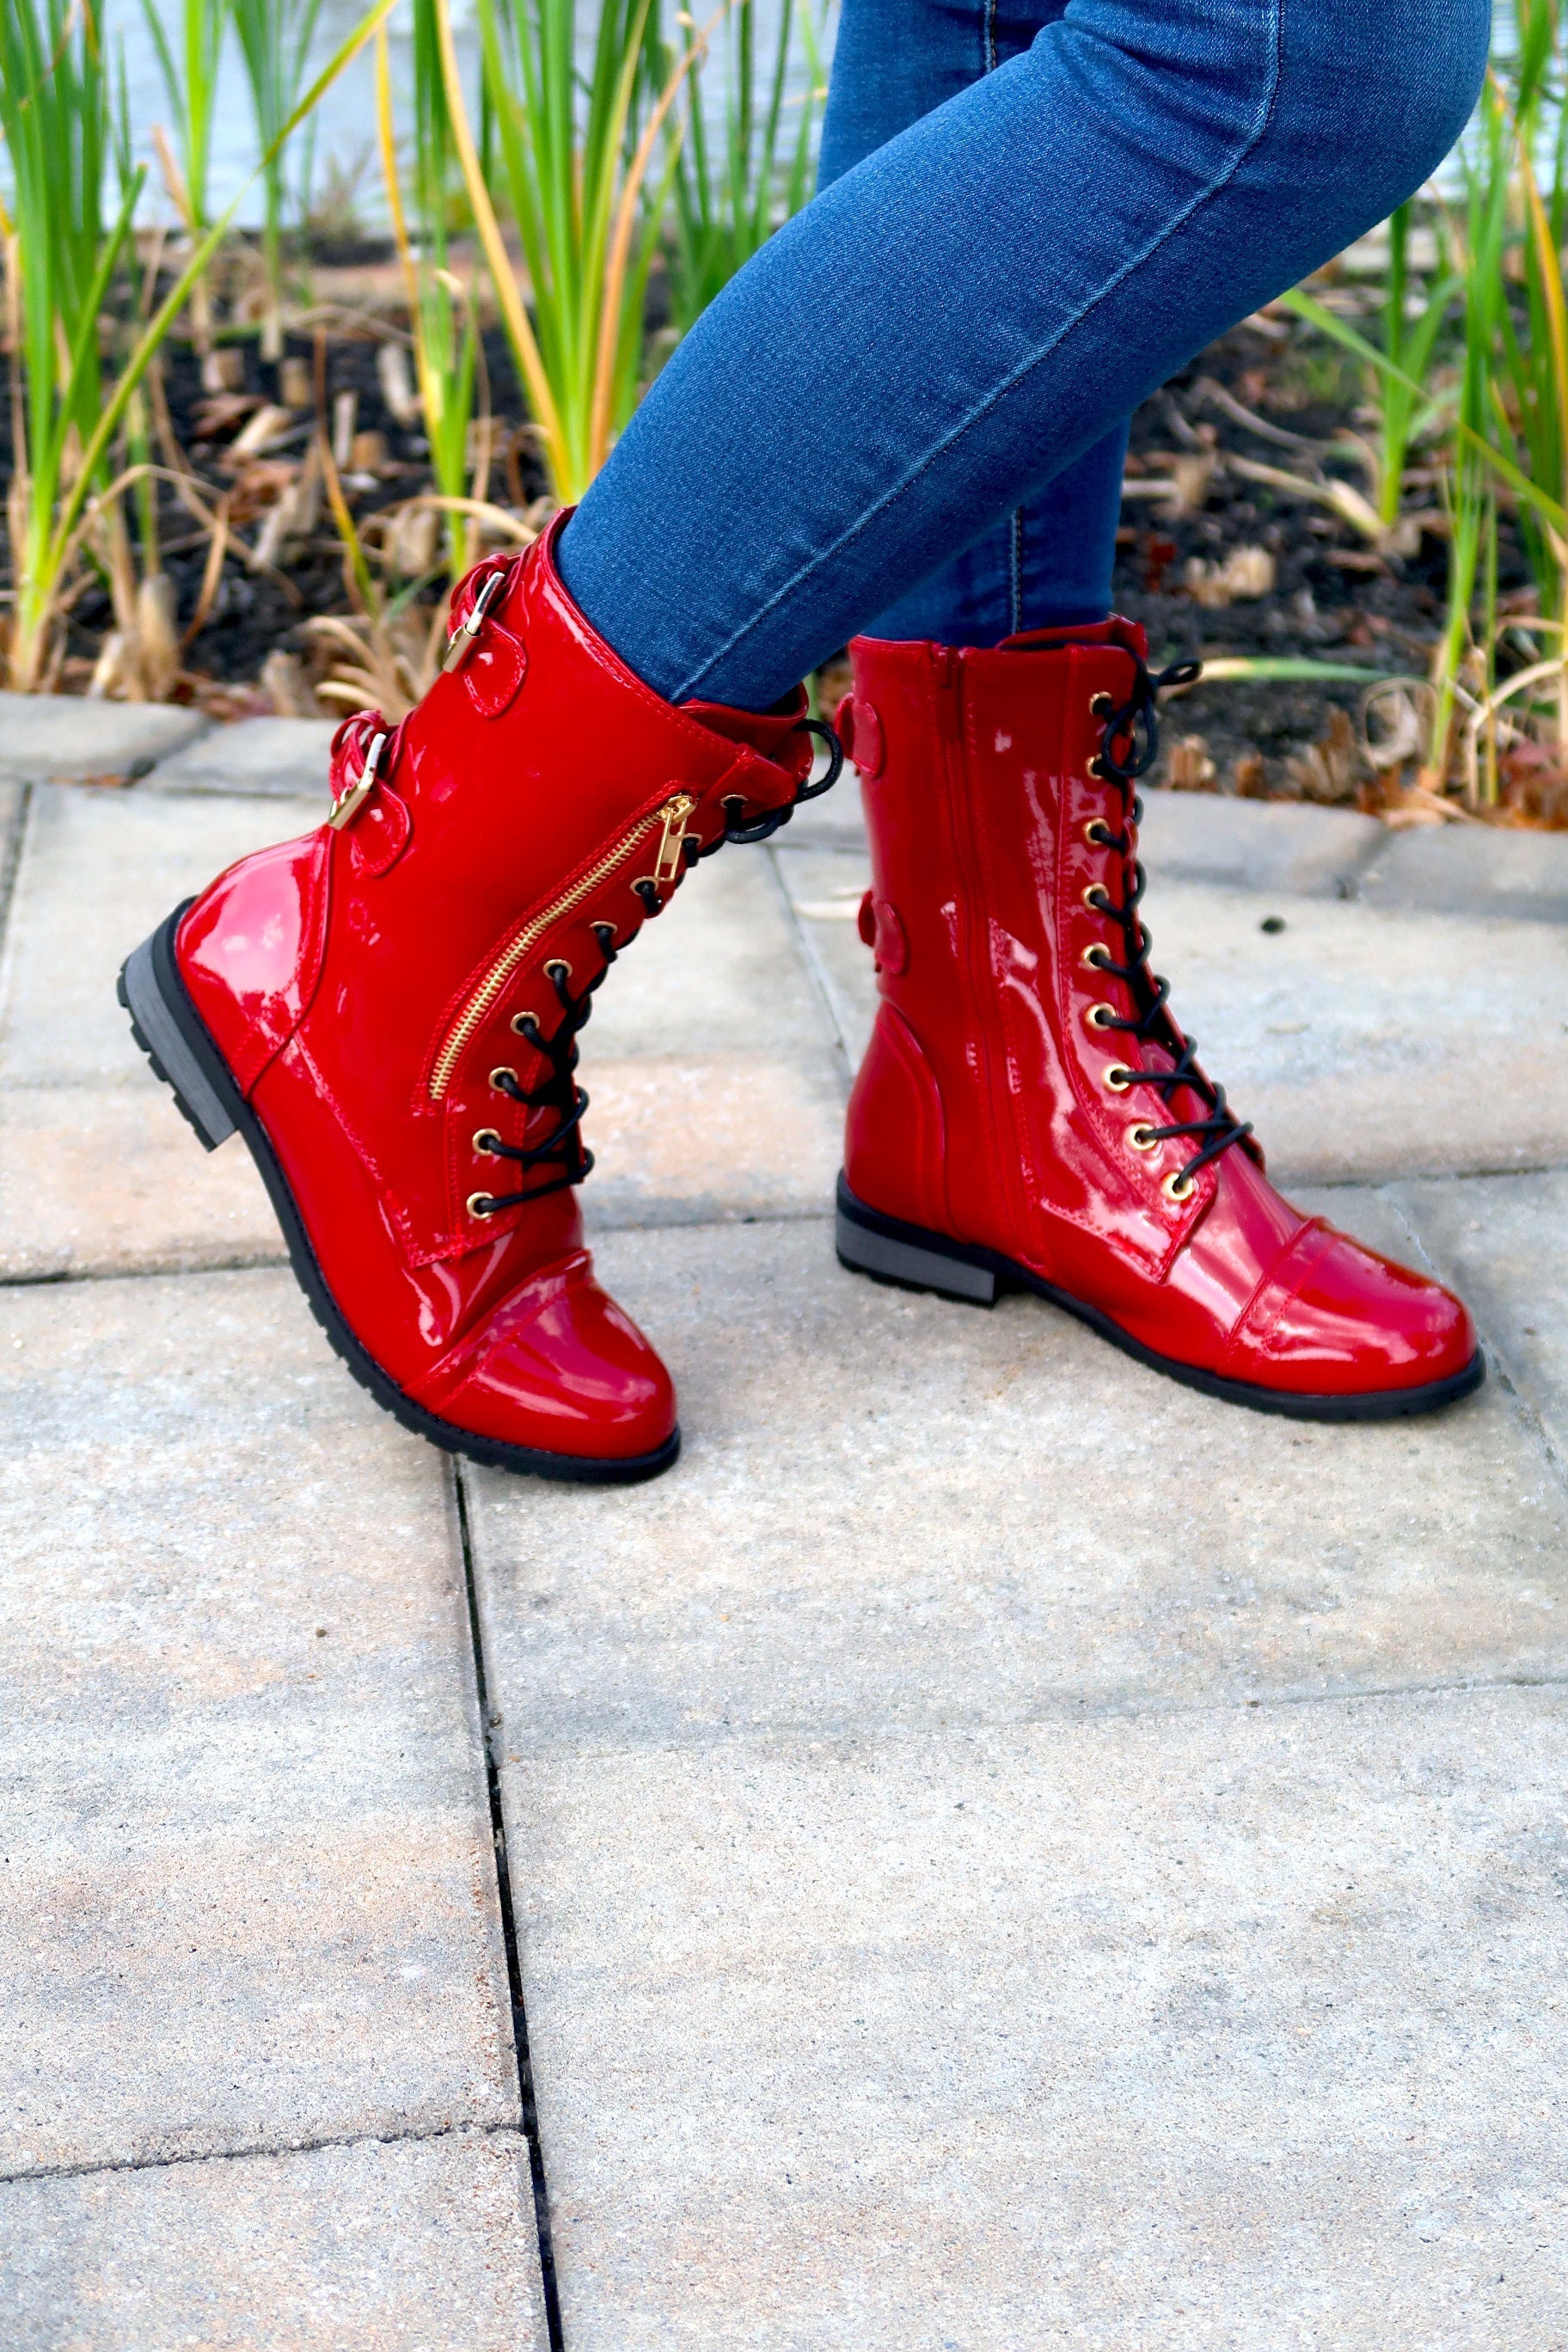 EDENS ZERO Rebecca Black Shoes Cosplay Boots